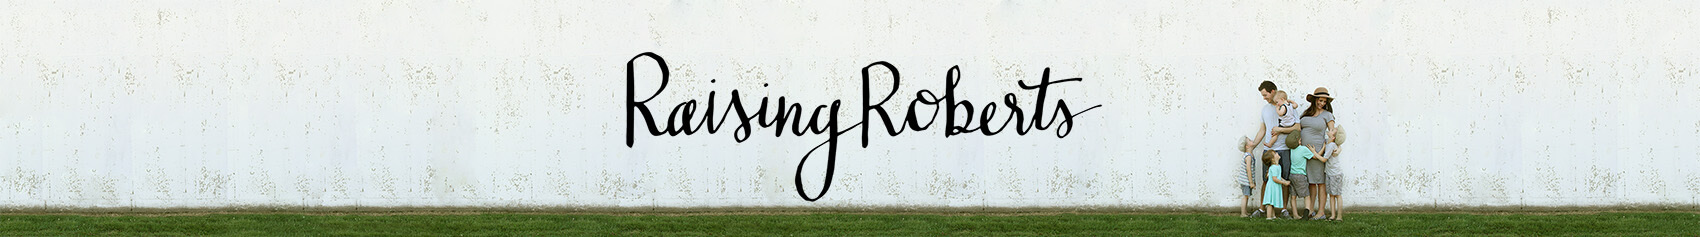 Raising Roberts